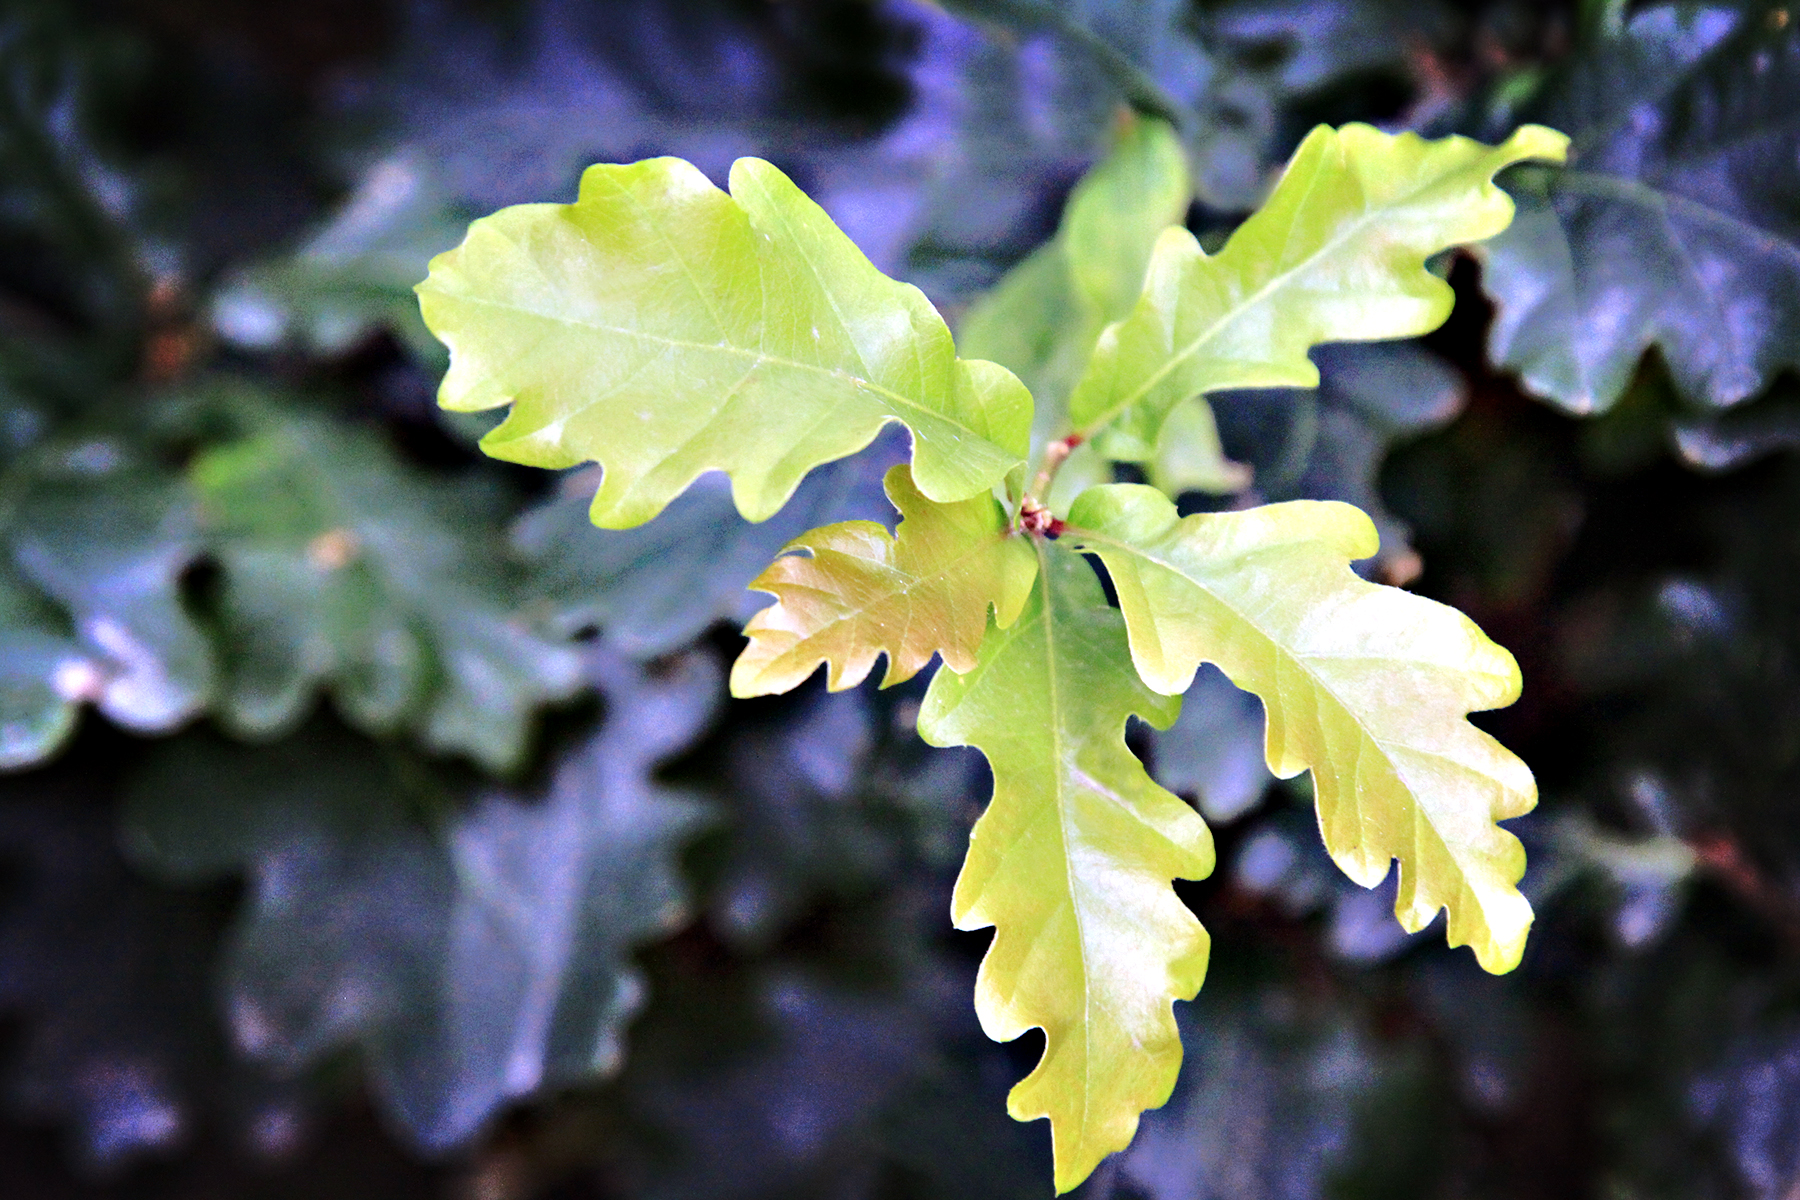 Oak Leaves of Righteous - Image (c) Lancia E. Smith